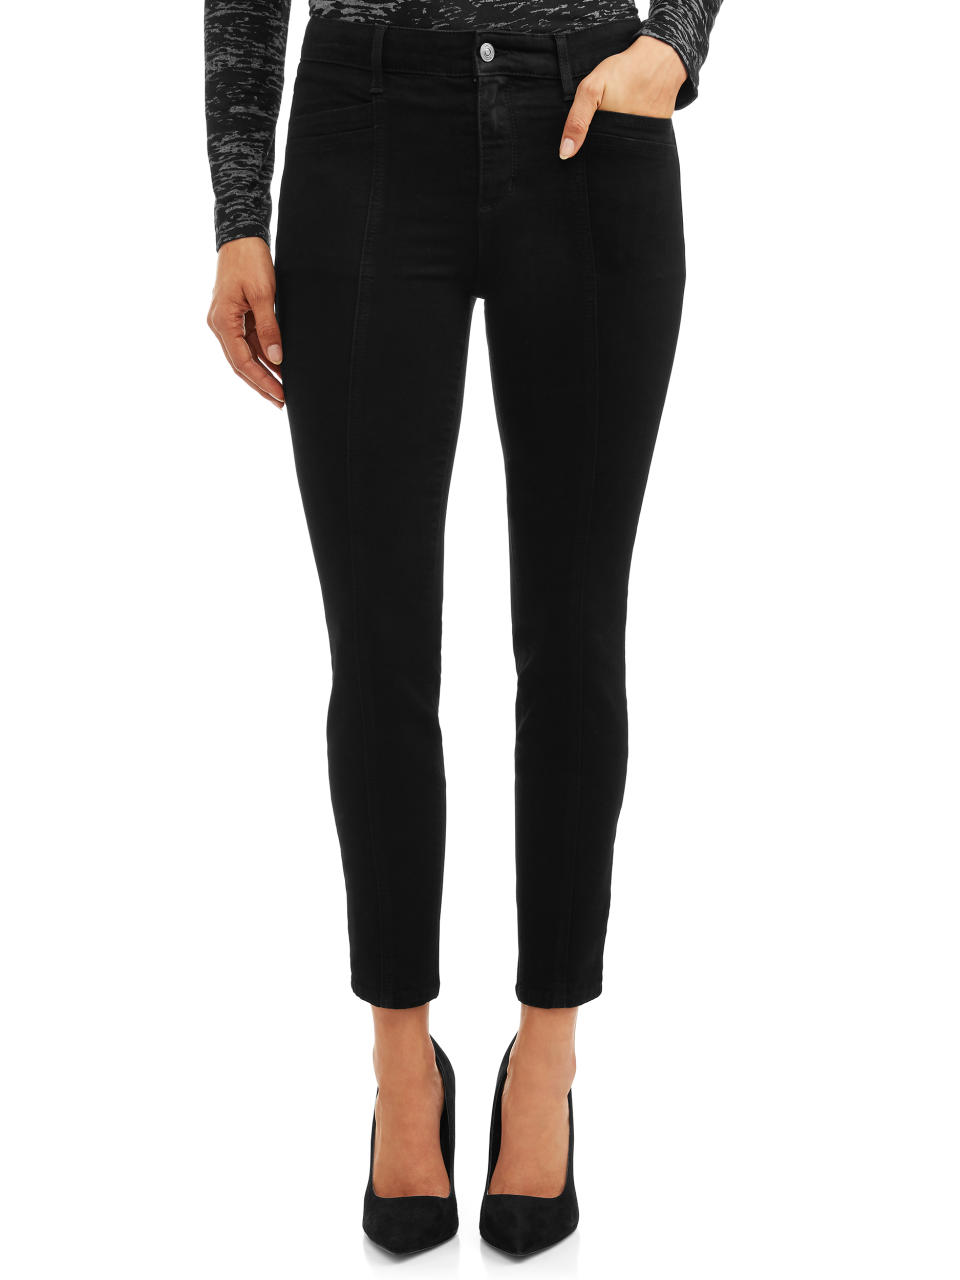 Consider this black pair of skinny jeans the Little Black Dress of denim. (Photo: Walmart)